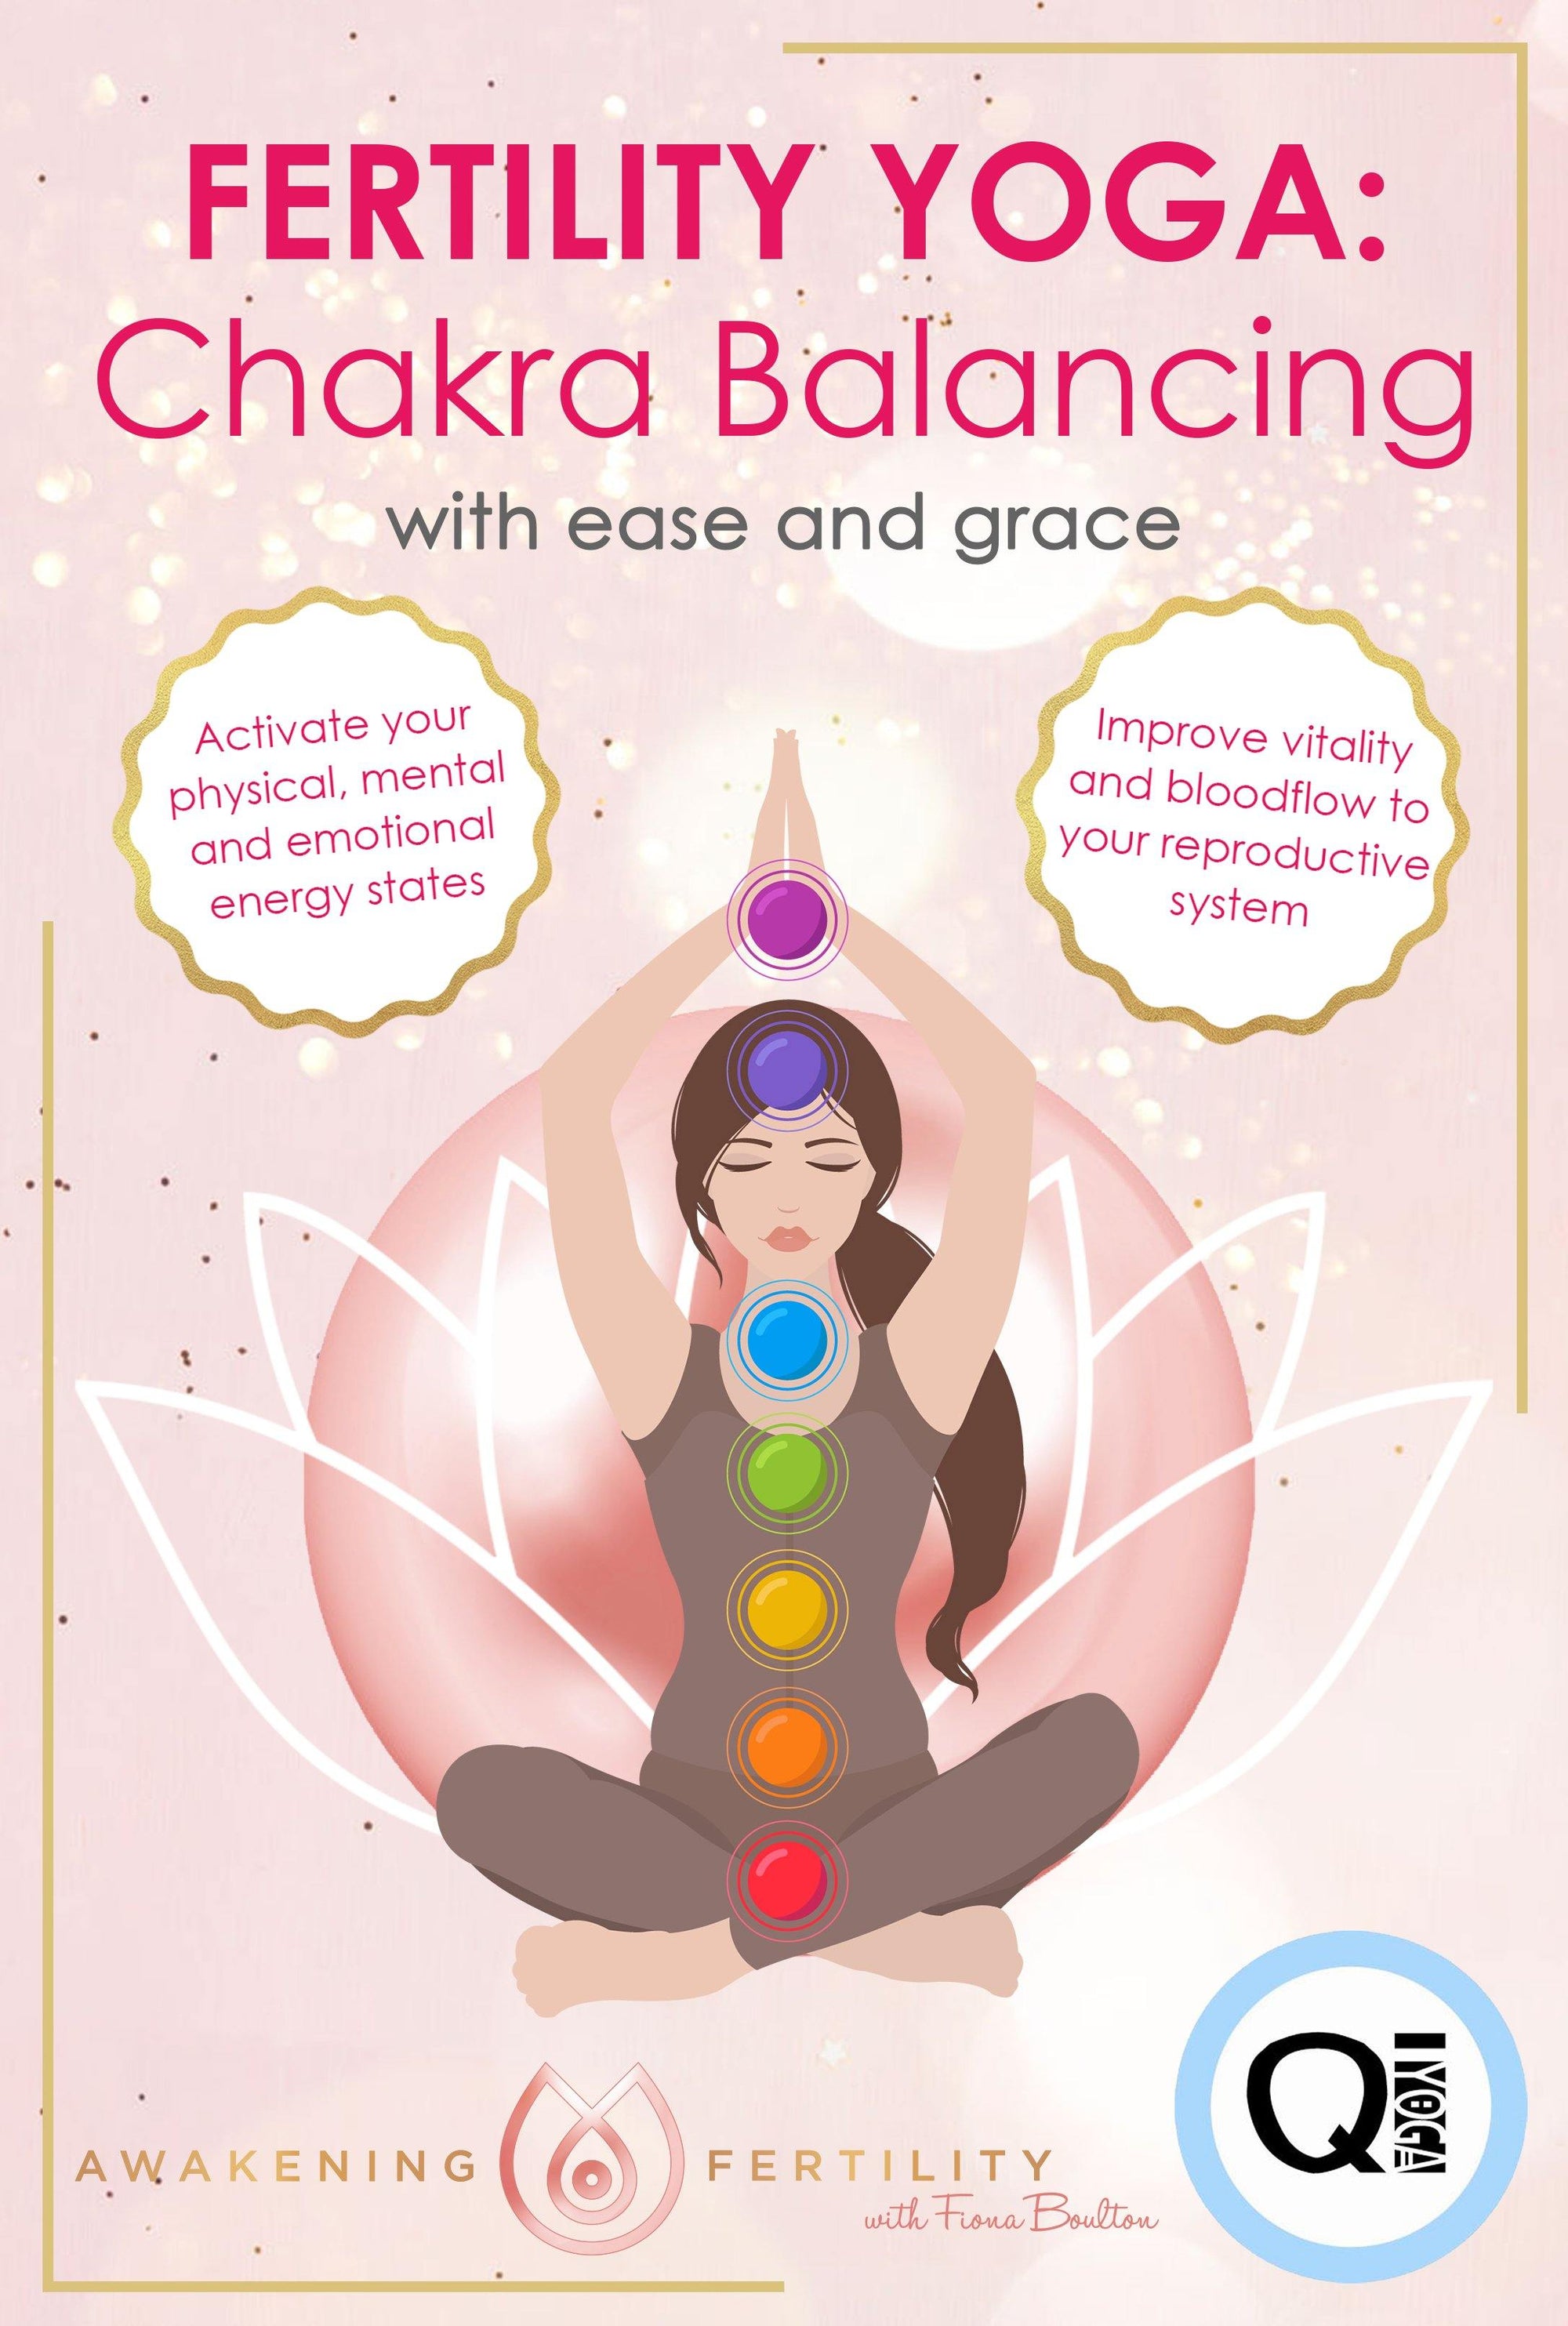 Fertility Yoga Chakra Balancing with TCM 5 Elements Healing